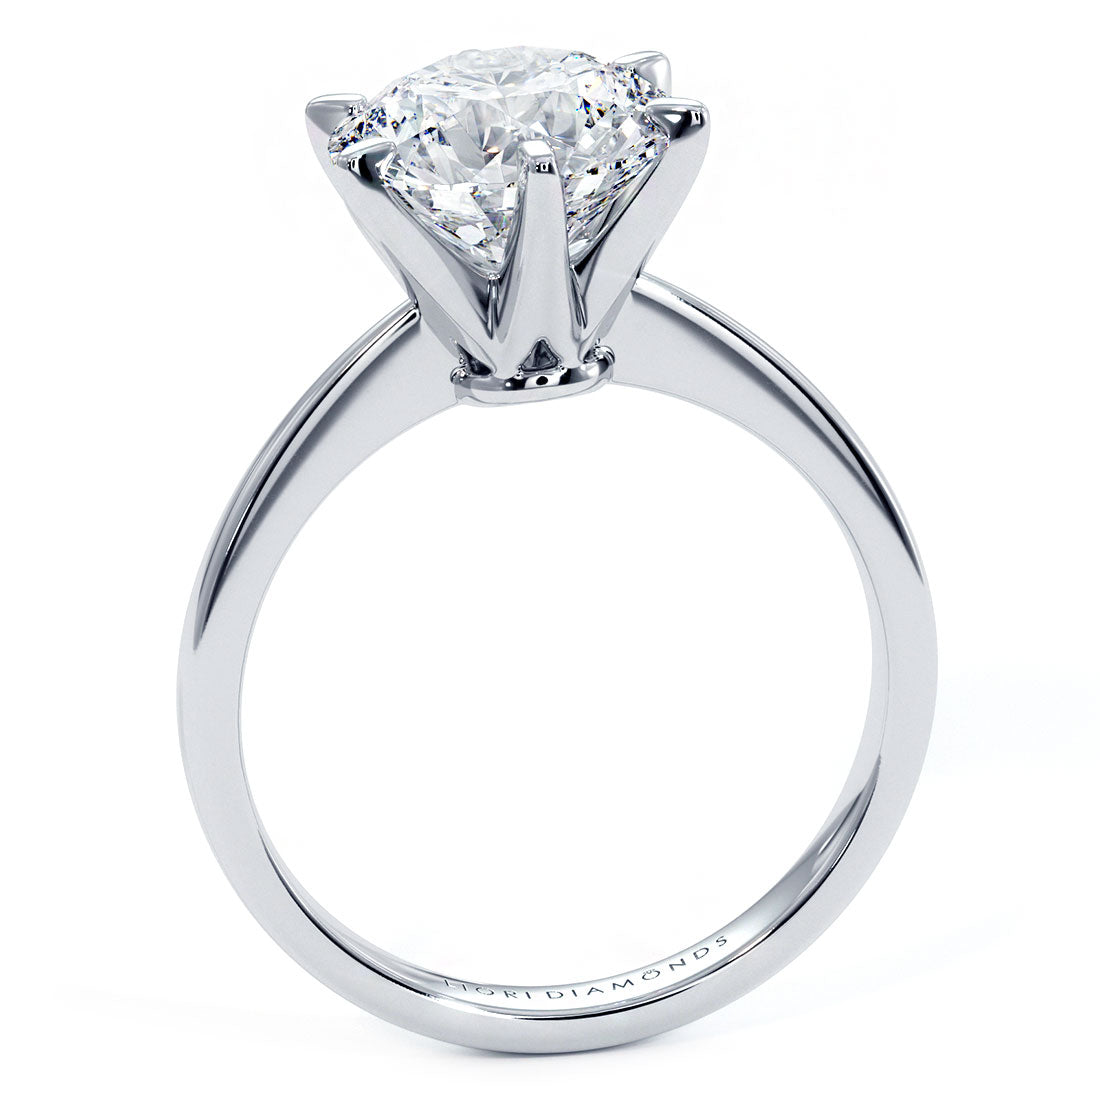 3 Carat Diamond Ring: The Diamond Pro's Guide